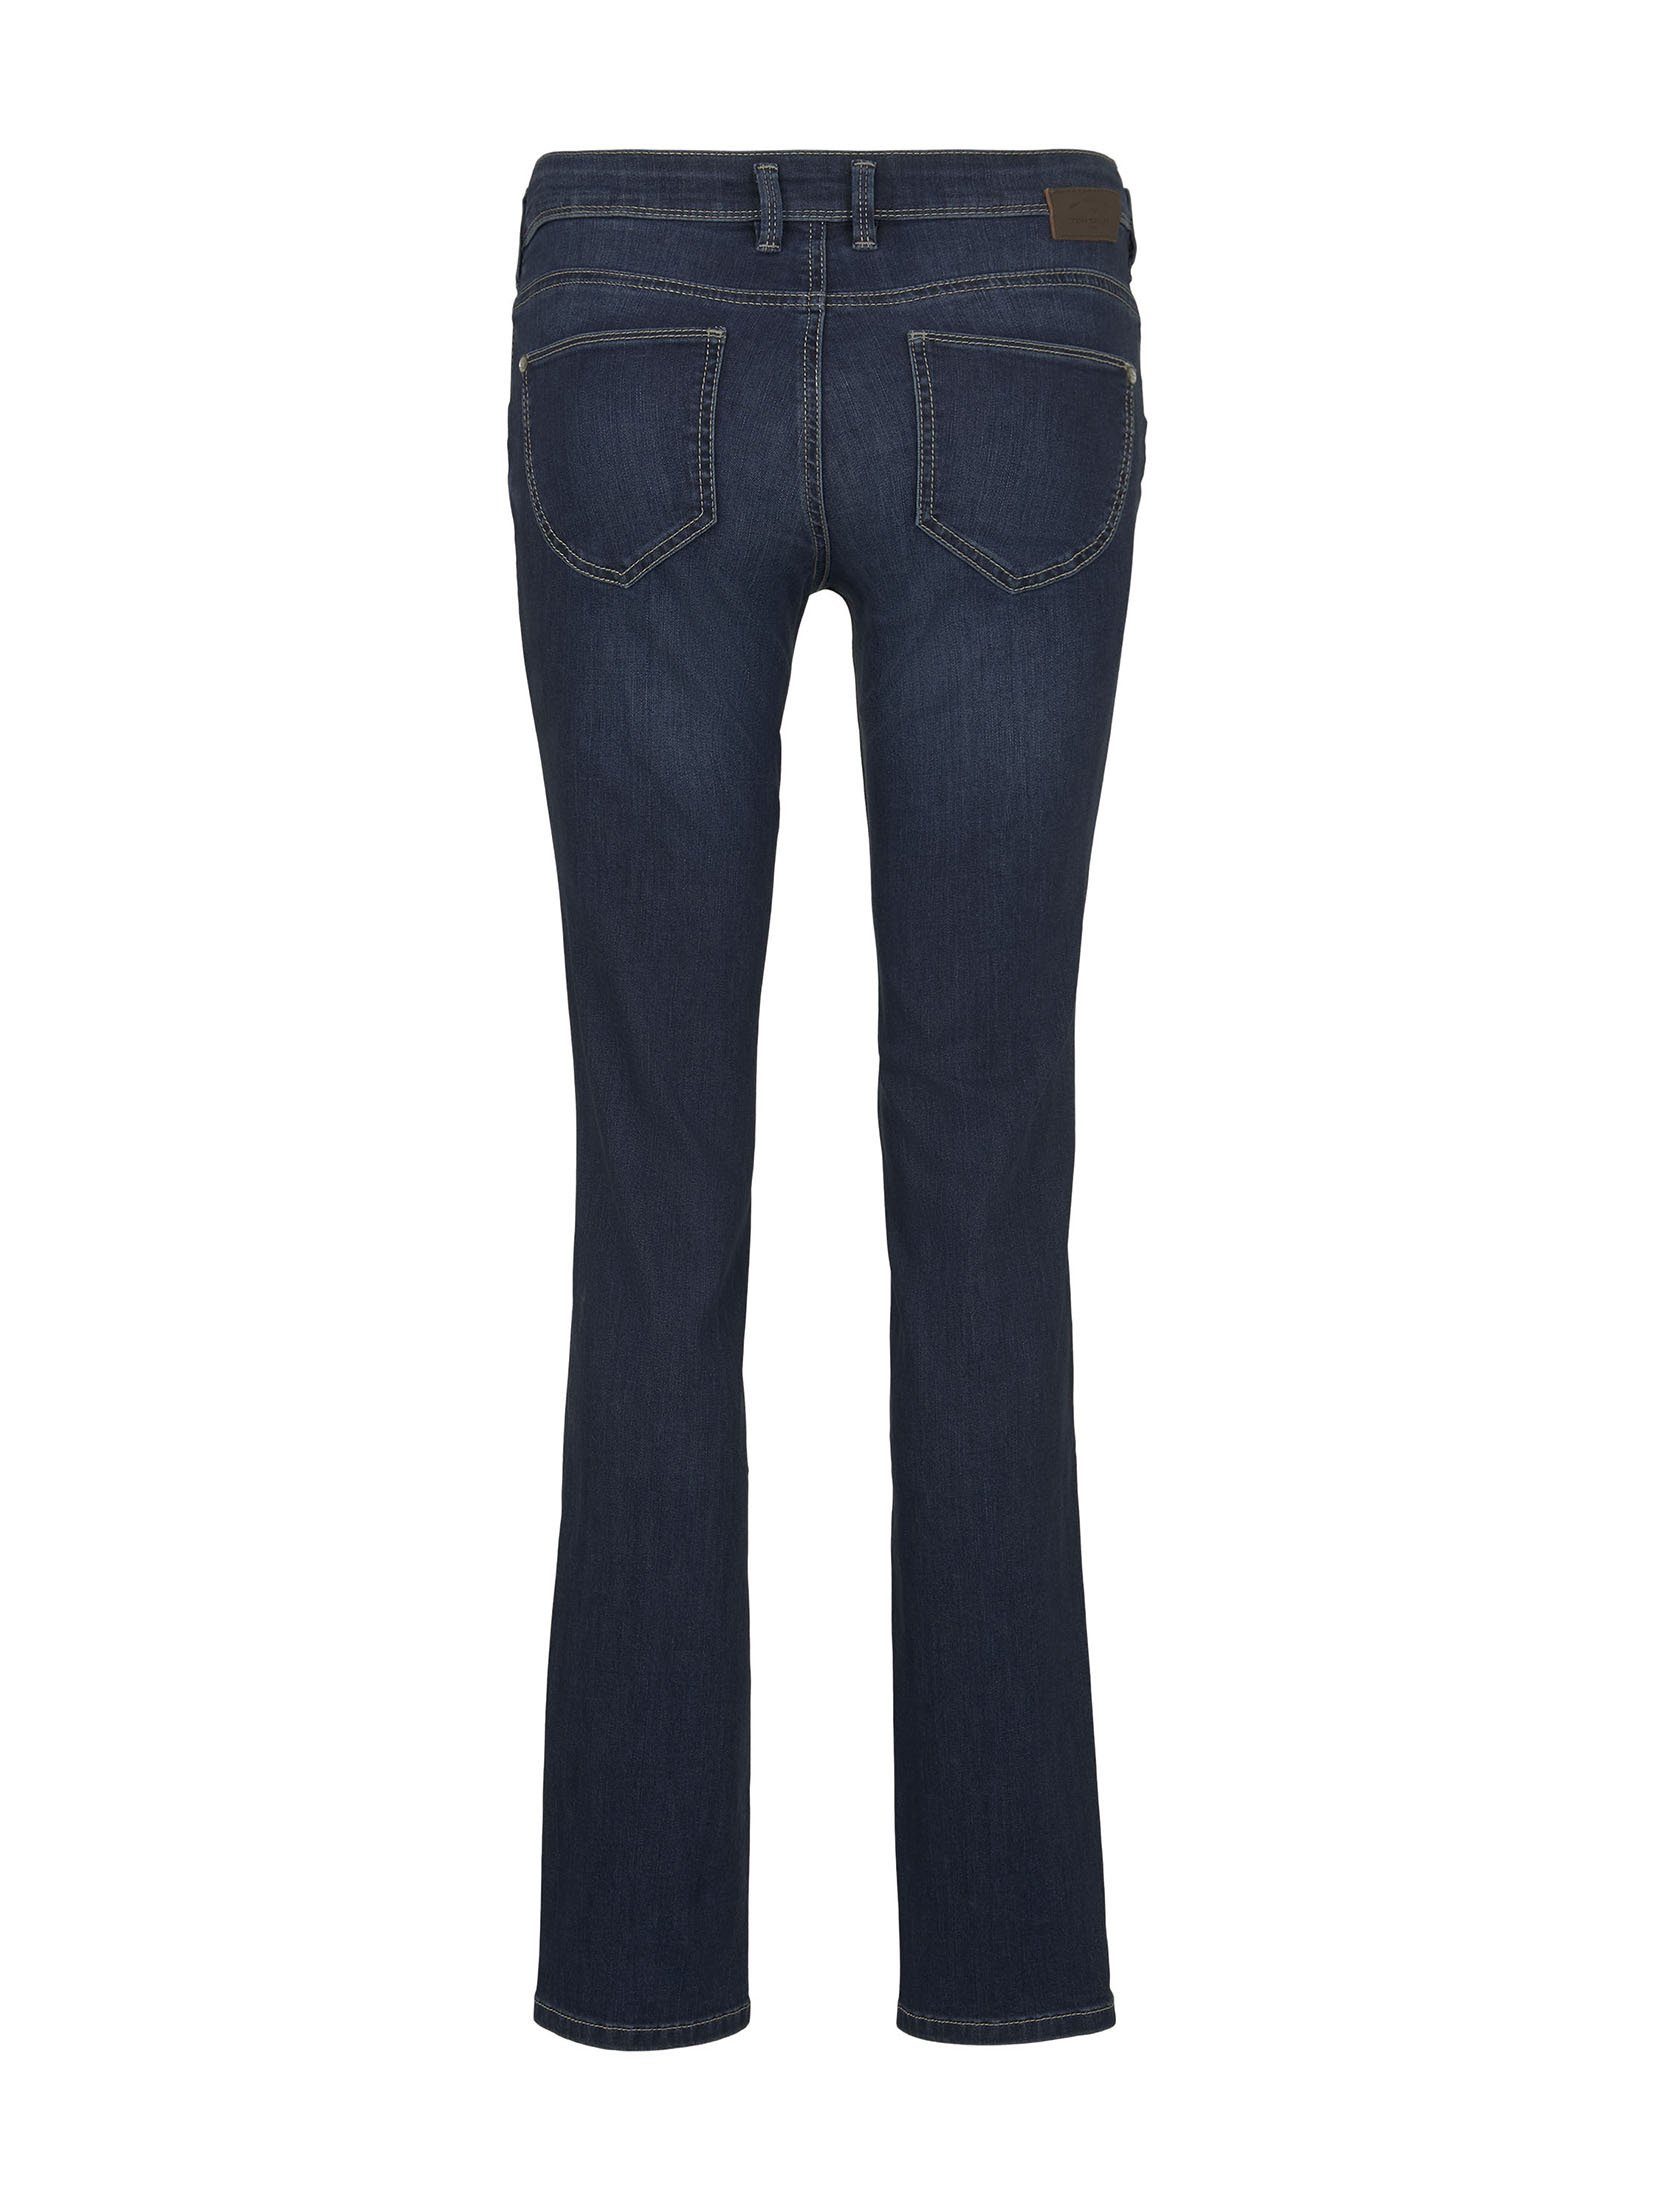 Jeans Straight Alexa TAILOR Skinny-fit-Jeans wash Bio-Baumwolle denim dark TOM mit stone